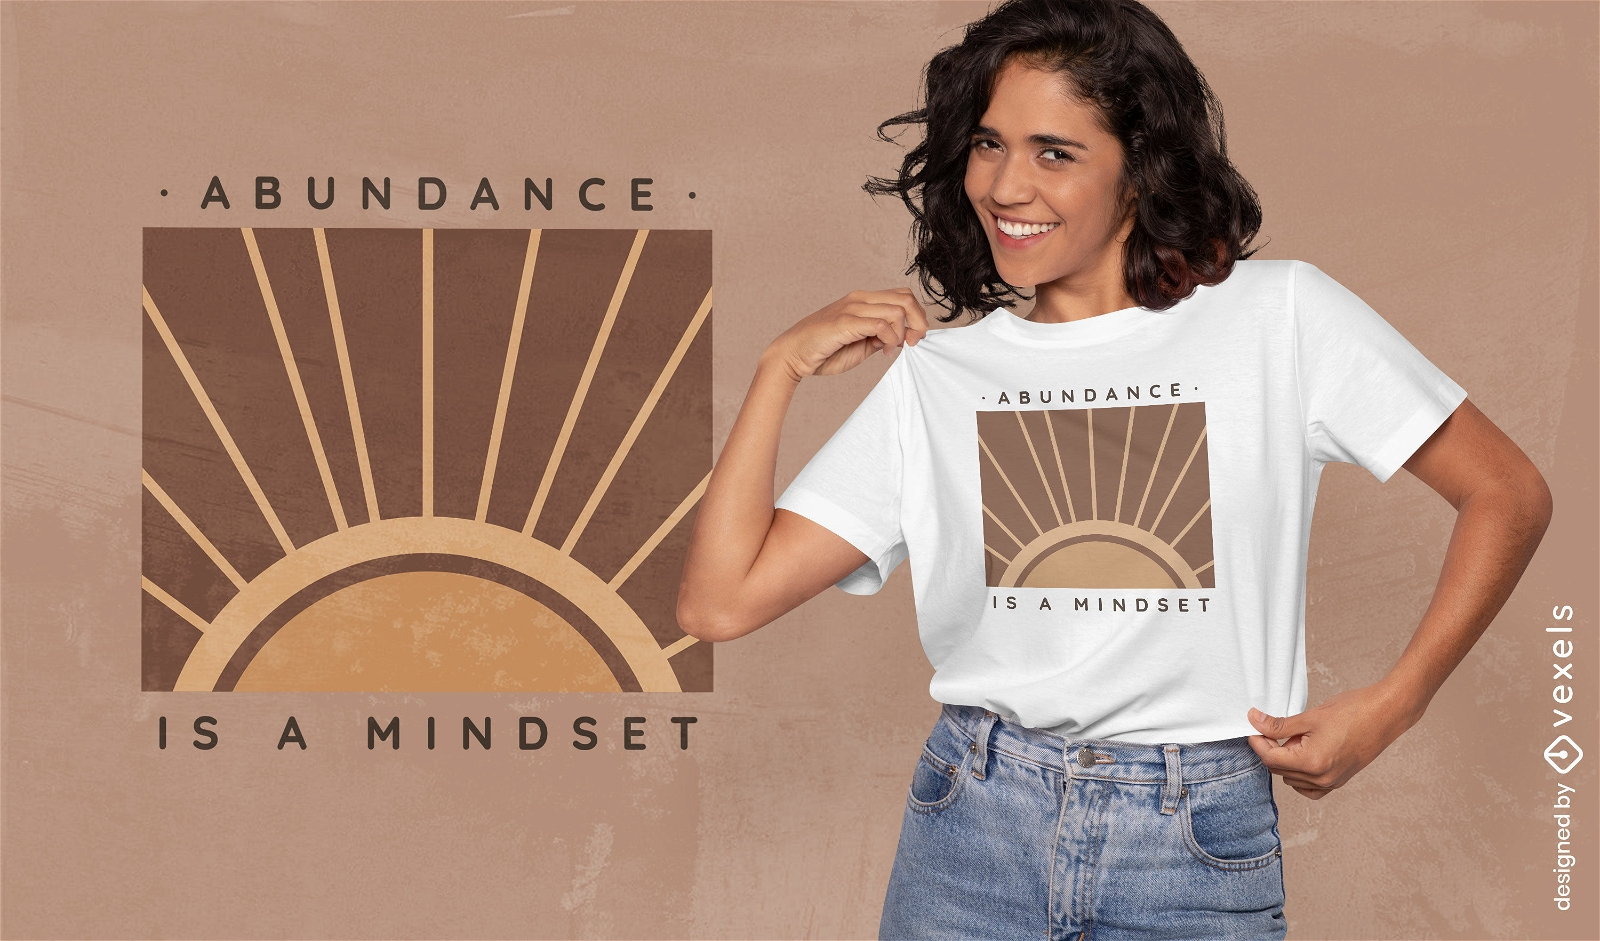 Abundance mindset t-shirt design